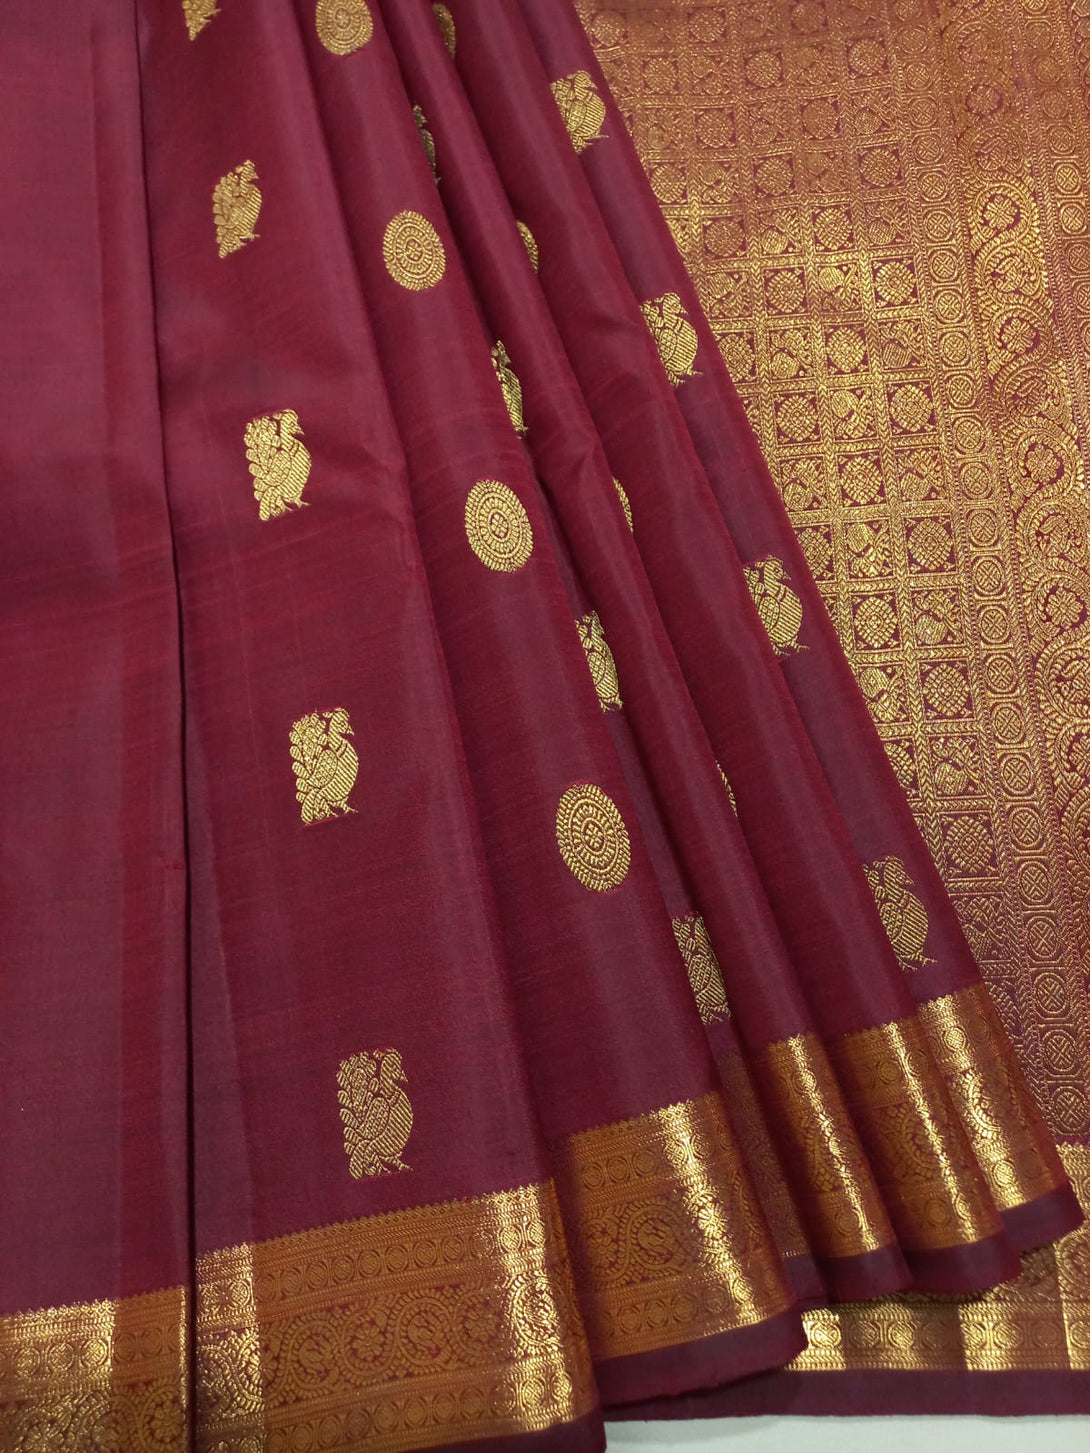 Timeless Maroon Handwoven Kanjivaram Saree - Elegance and Tradition Unveiled.